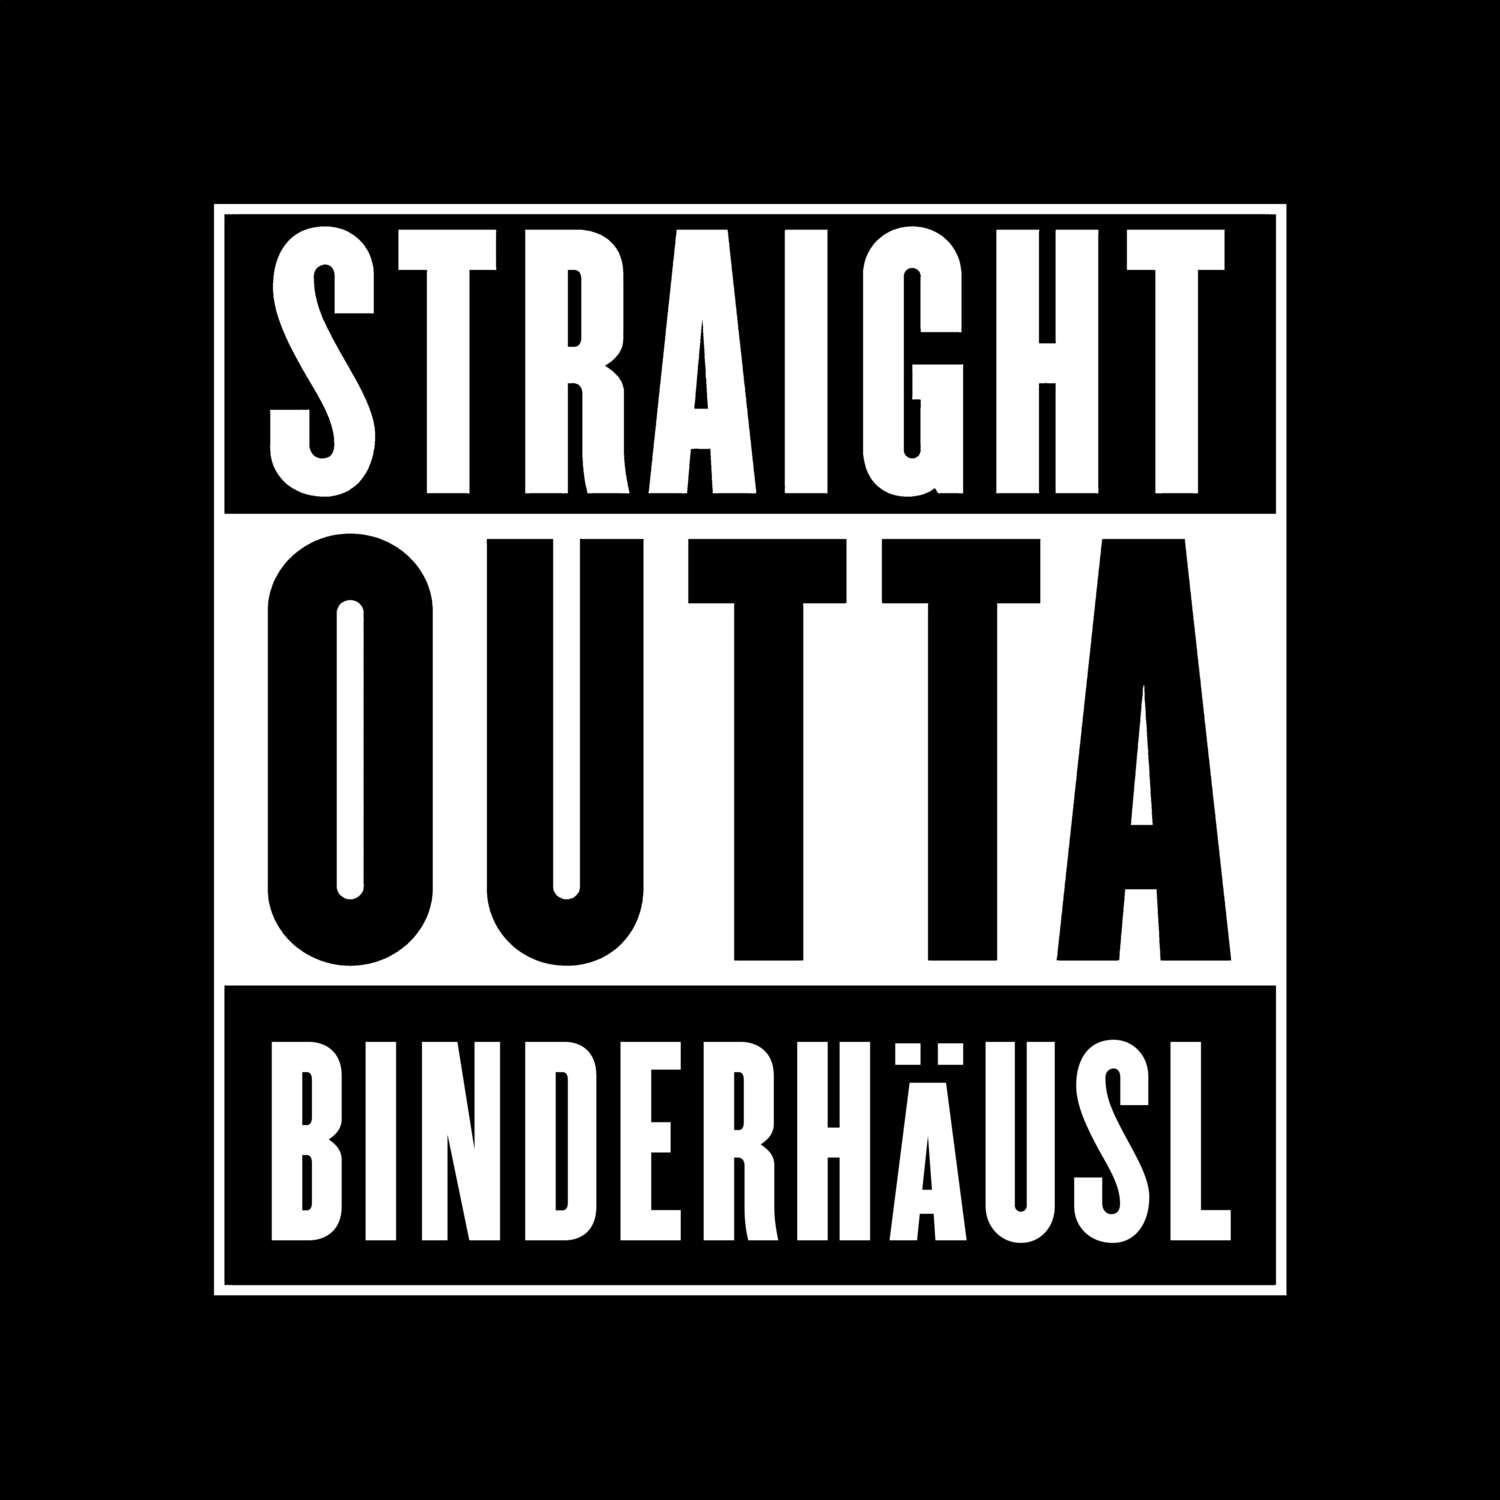 Binderhäusl T-Shirt »Straight Outta«